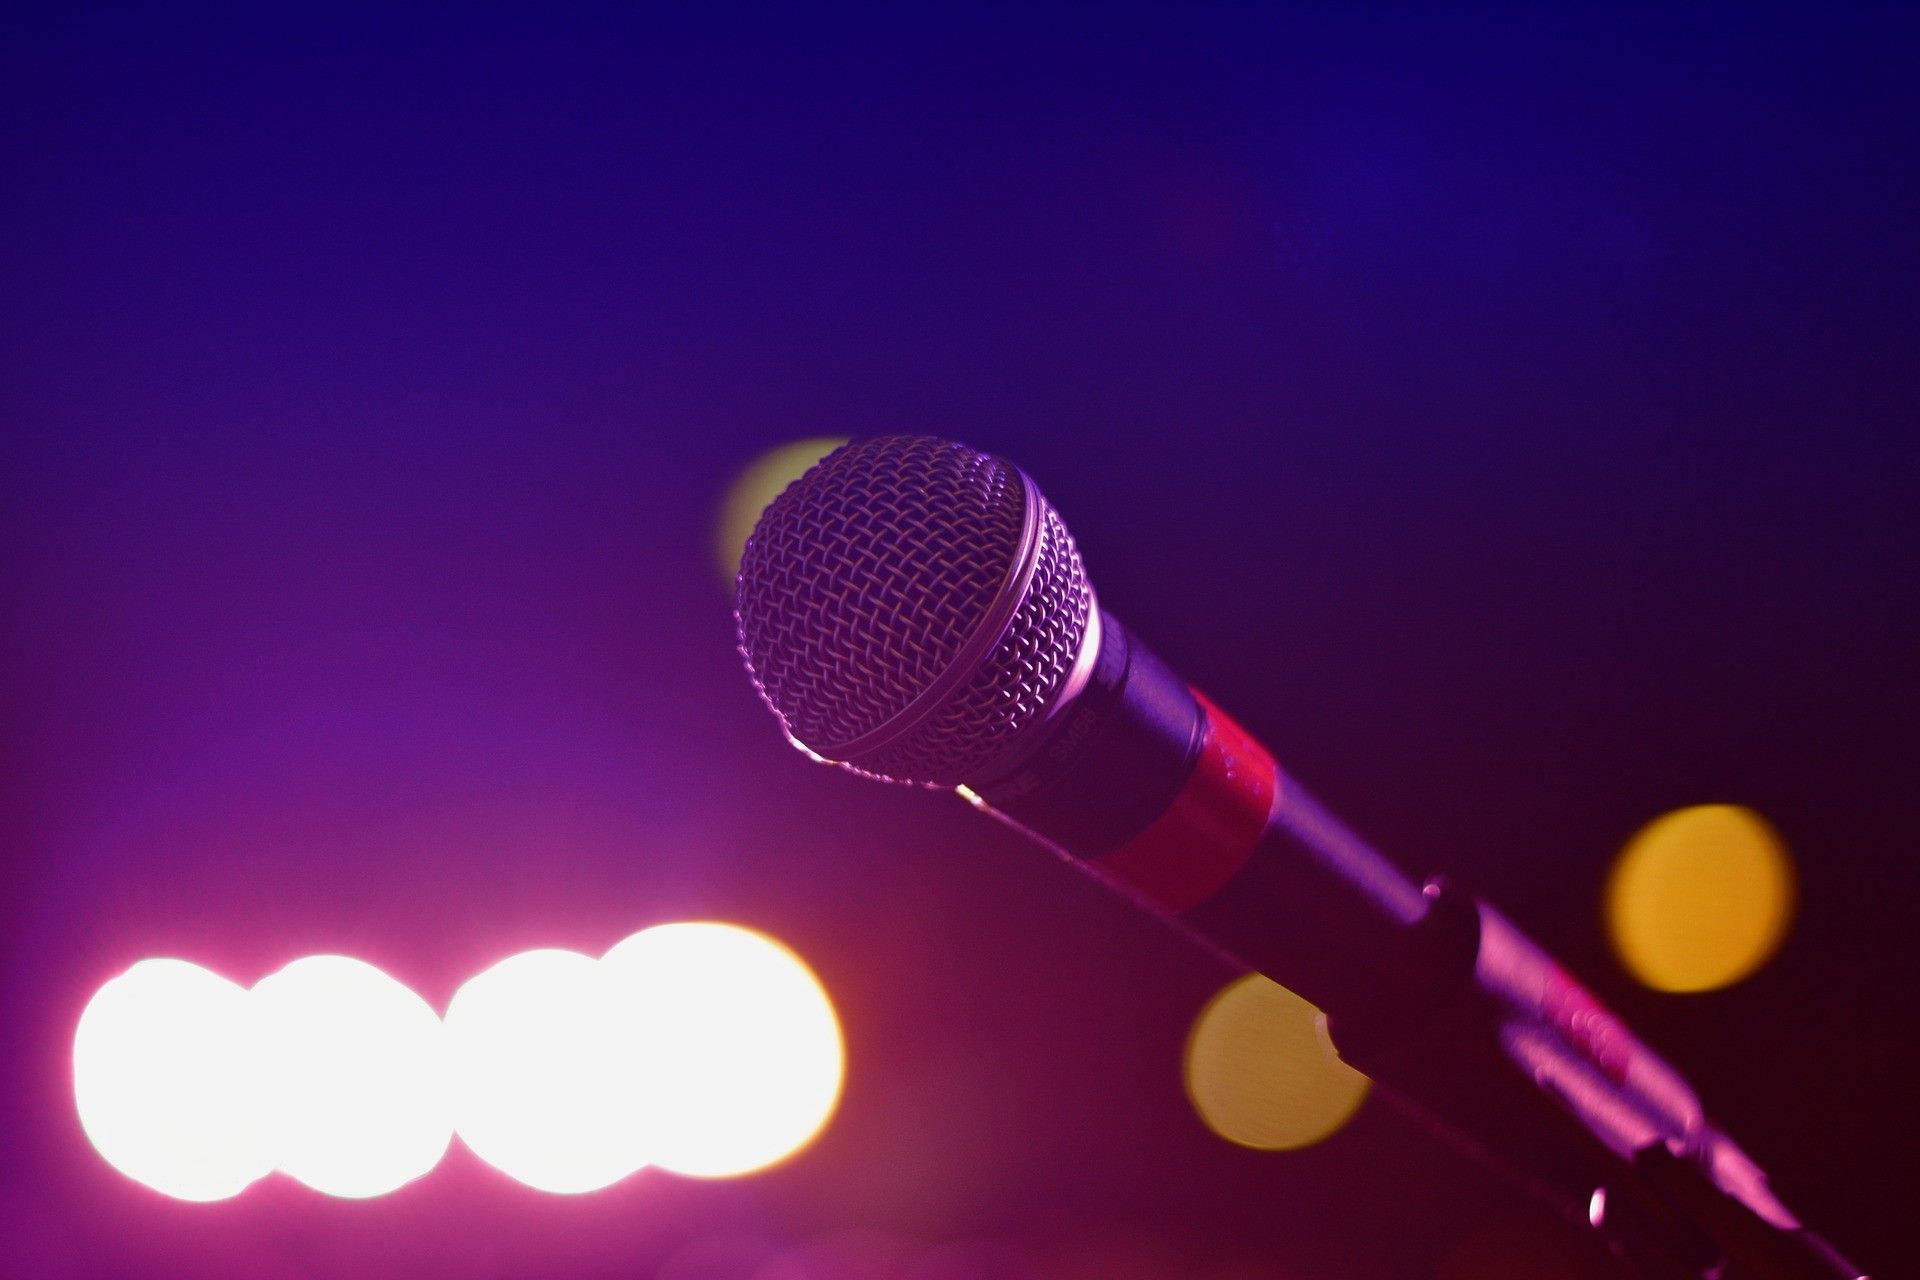 DOH warns against karaoke use as singing may spread COVID-19